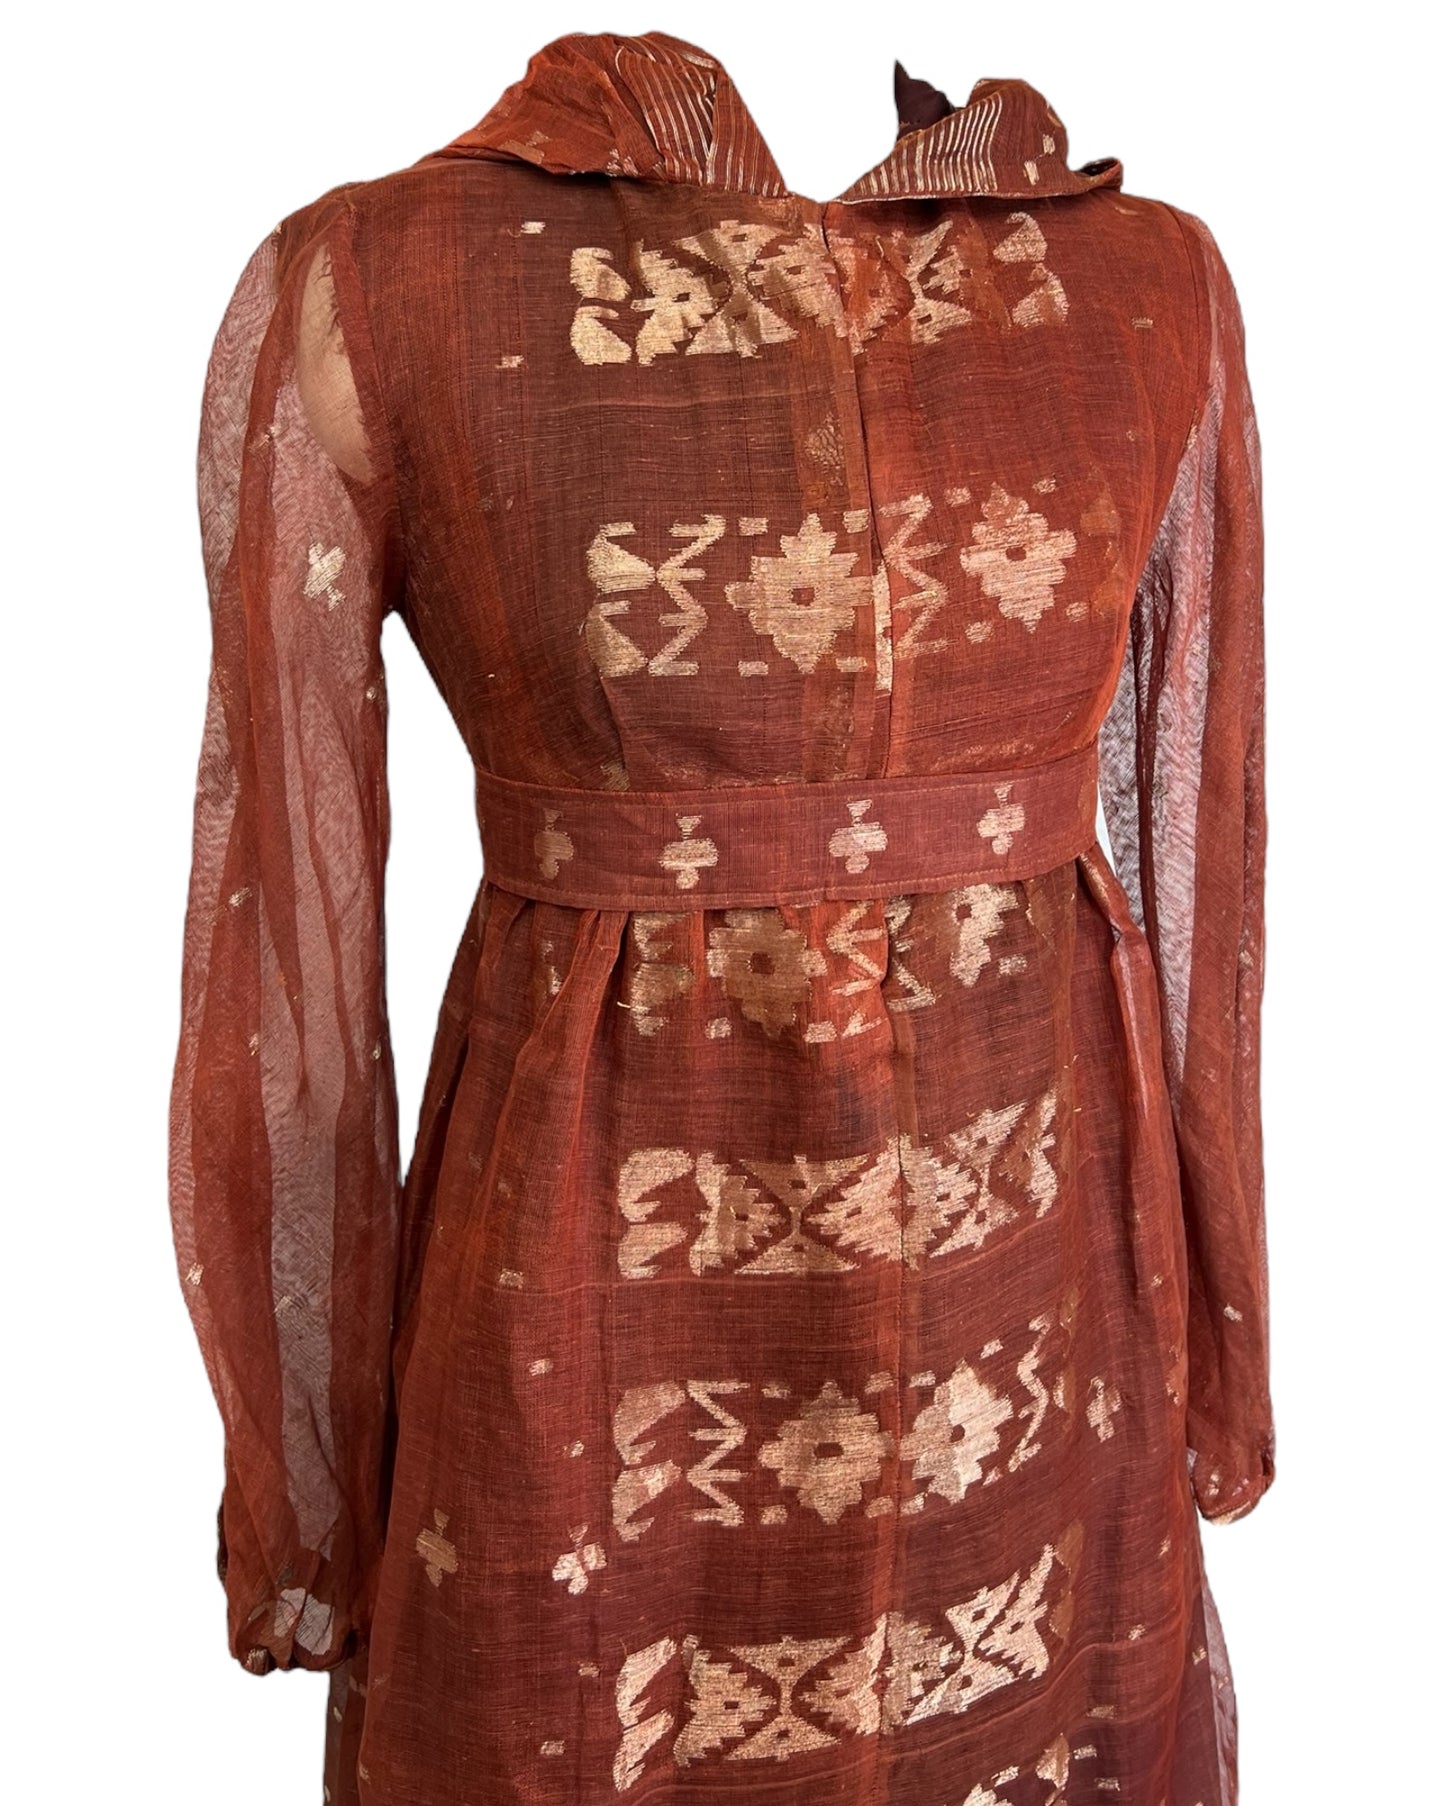 1970s Terrific Terracotta Dress